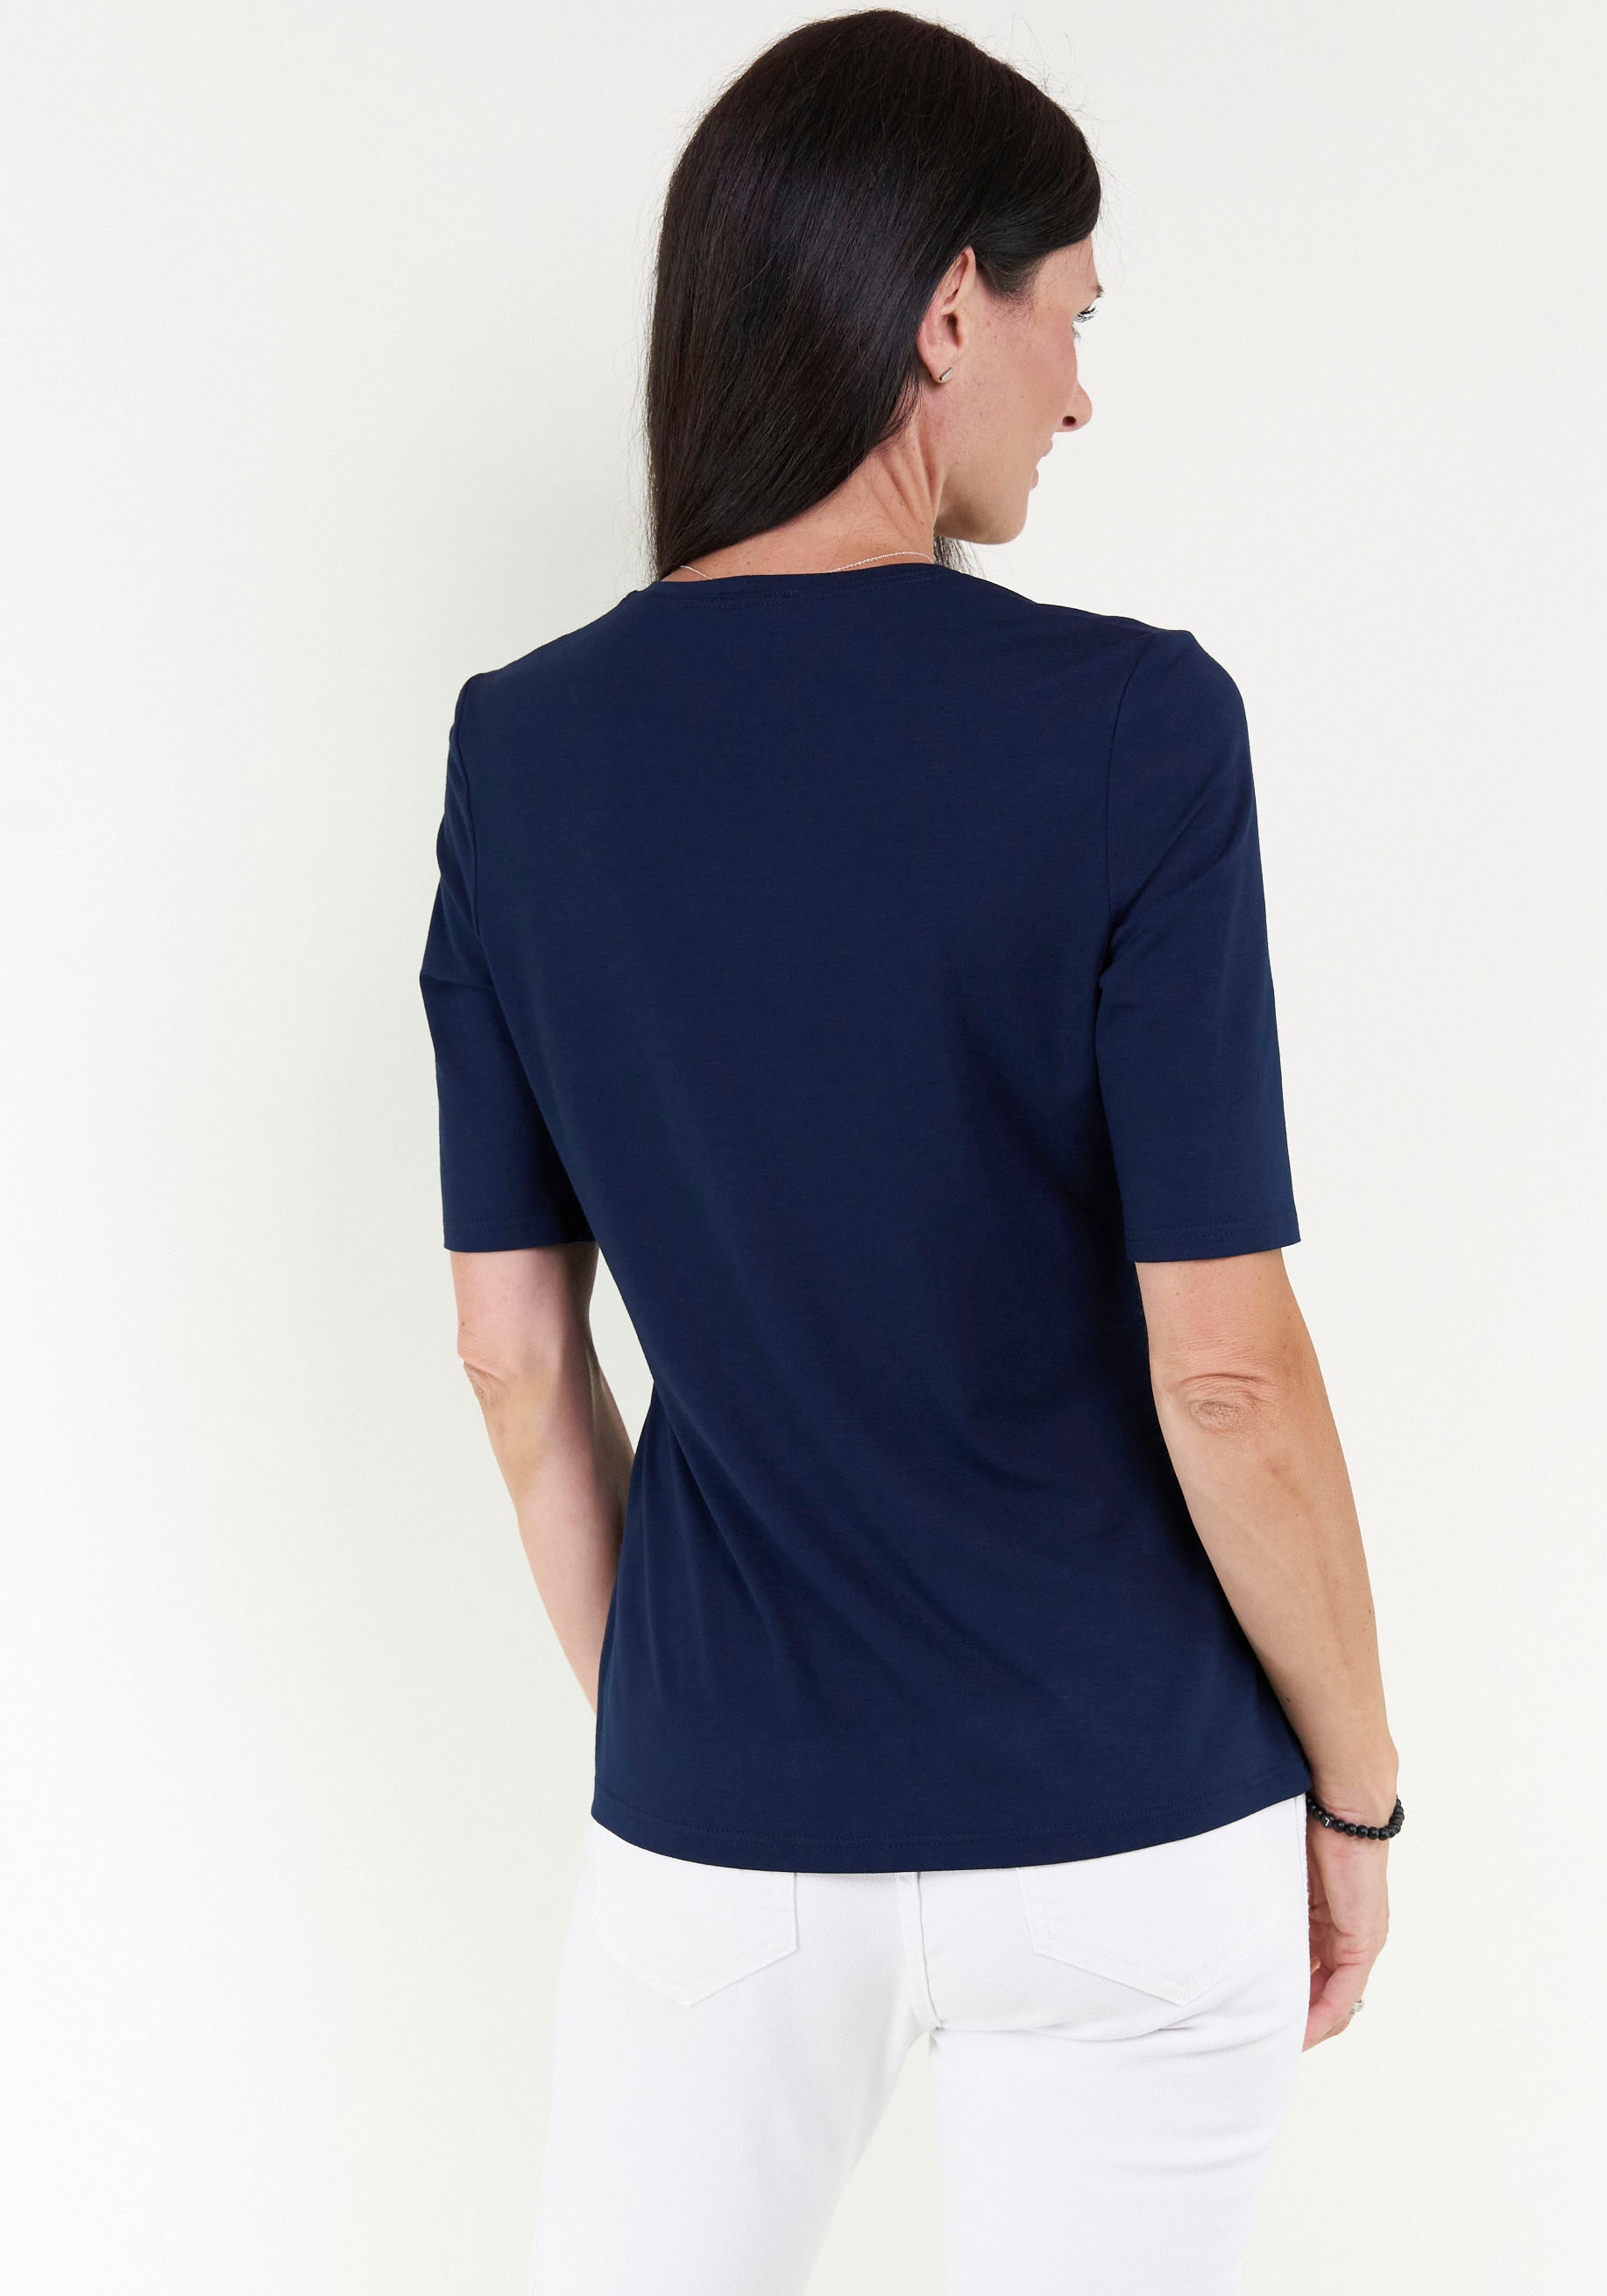 Niedrigpreisig Seidel Moden V-Shirt, mit Halbarm IN OTTOversand bei softem Material, GERMANY aus MADE